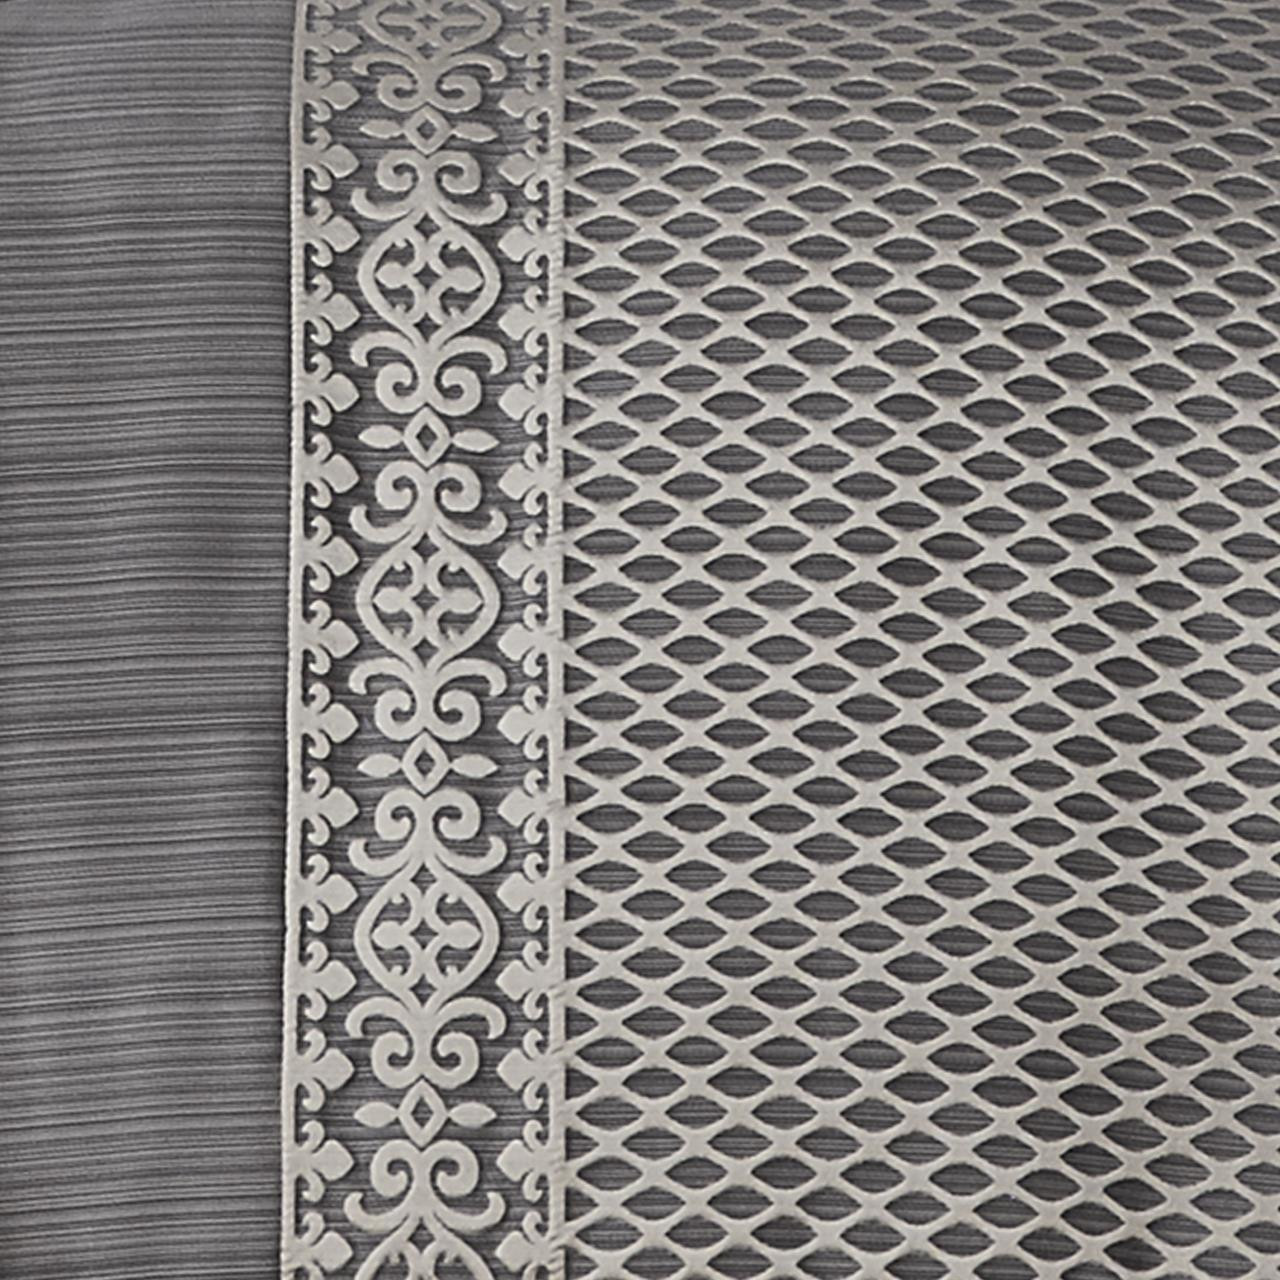 Houston Charcoal Comforter Collection -